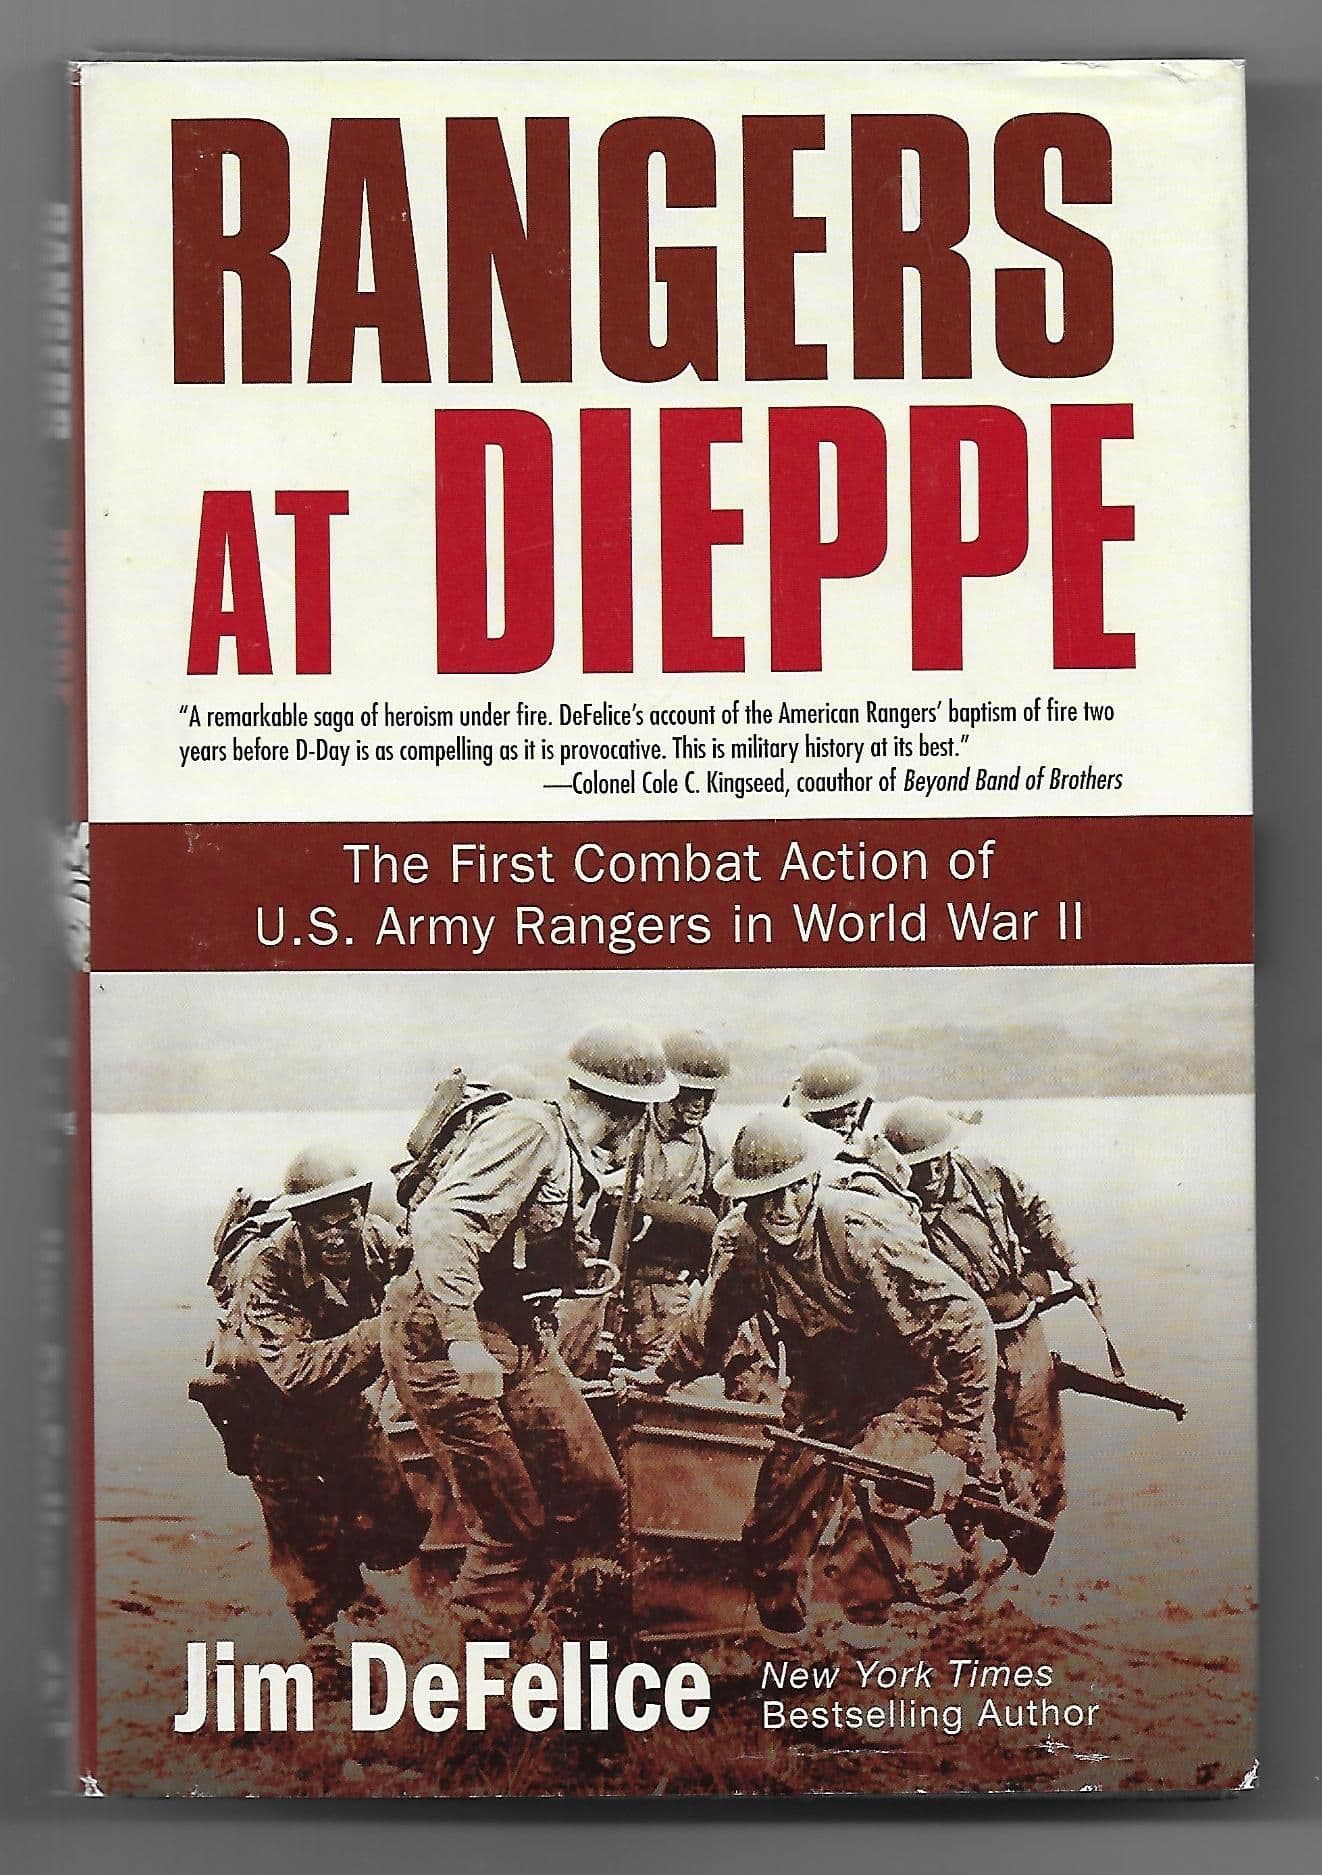 Rangers at Dieppe